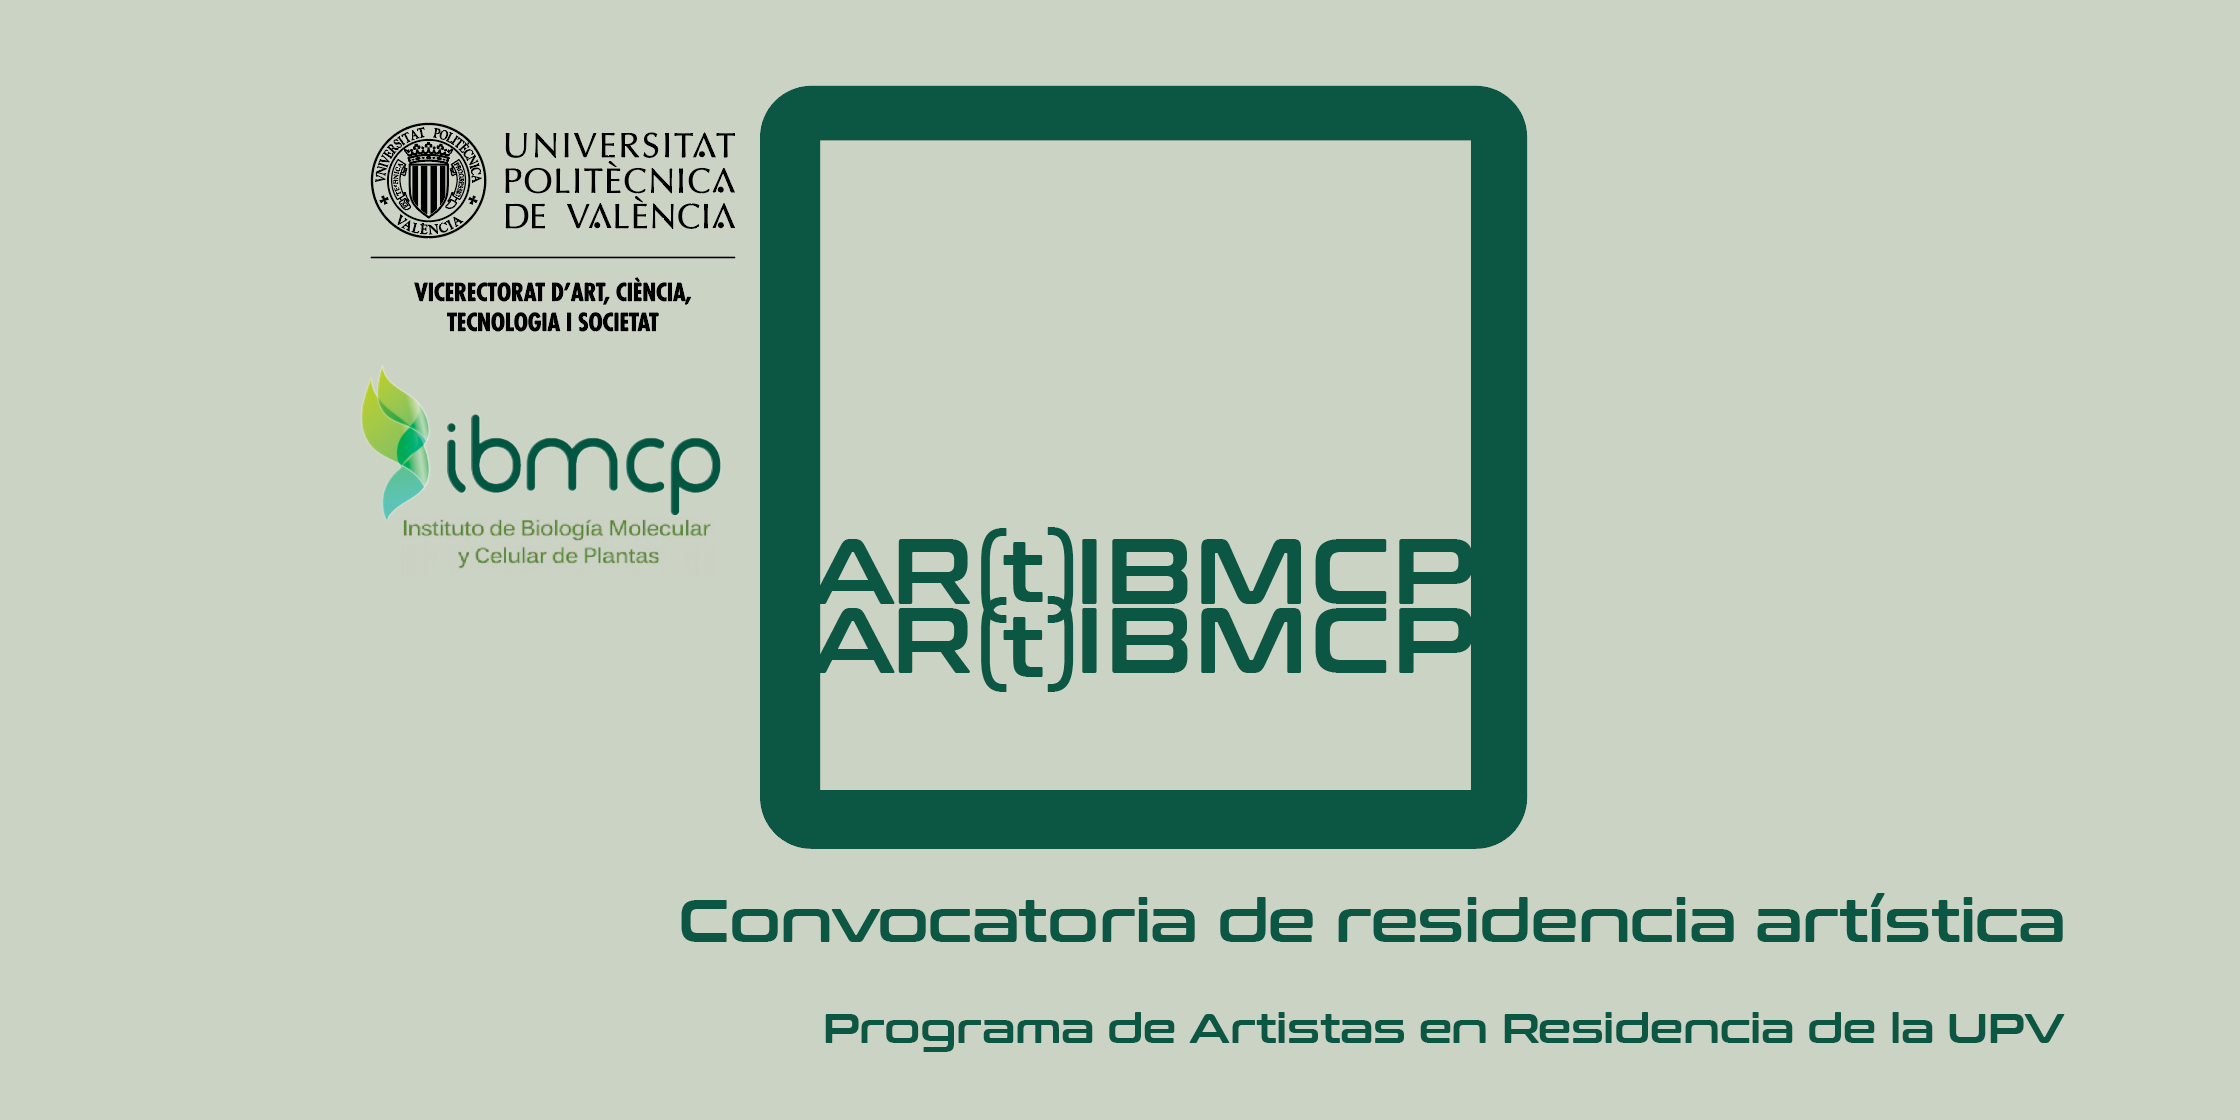 AR(t)IBMCP Residència Artistica